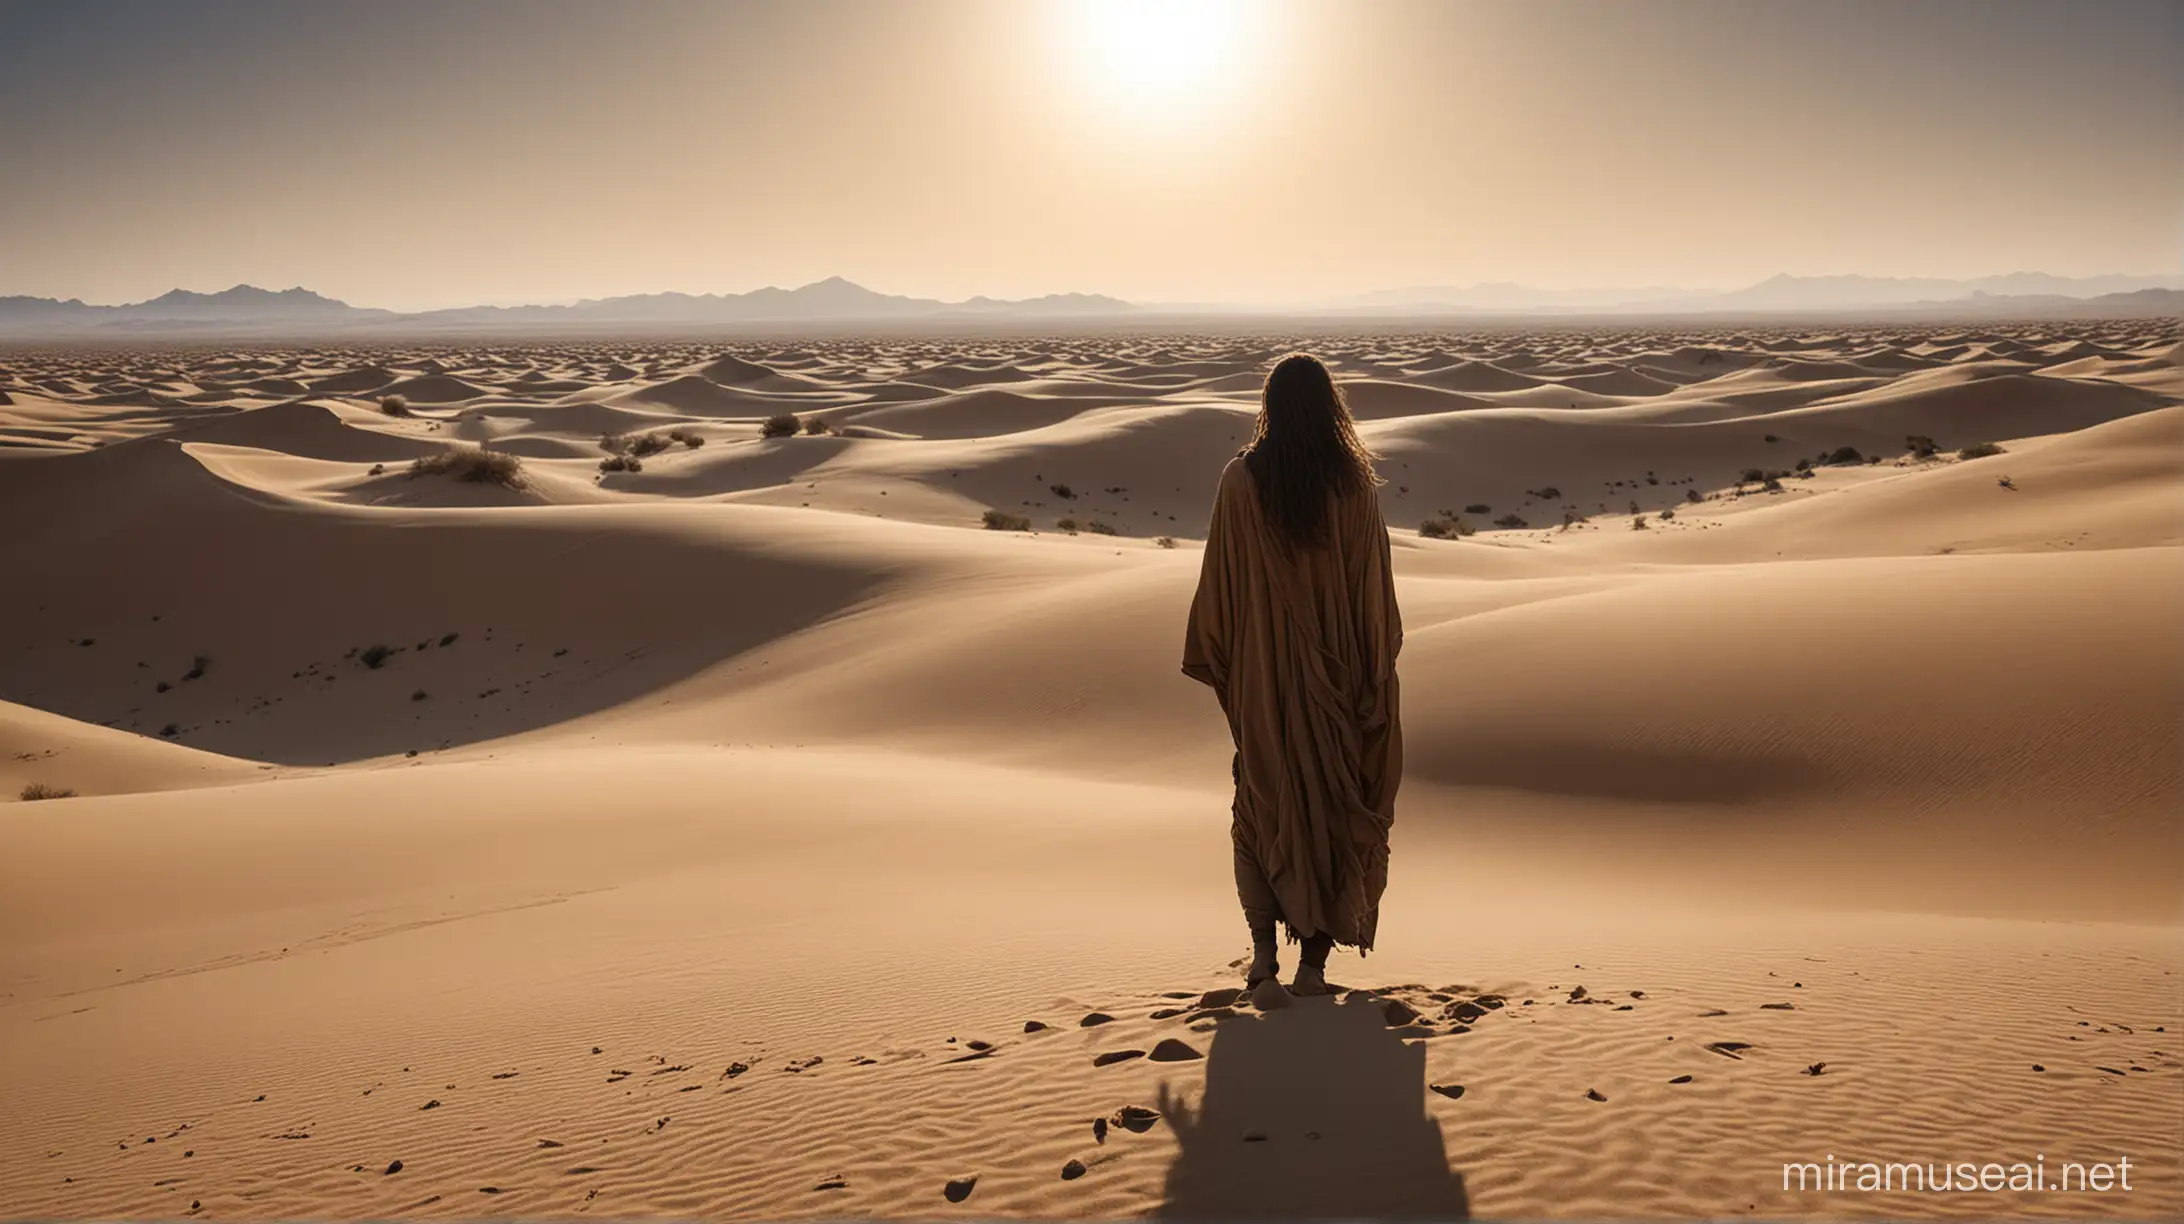 Solitary Nomad Amidst Vast Desert Landscape